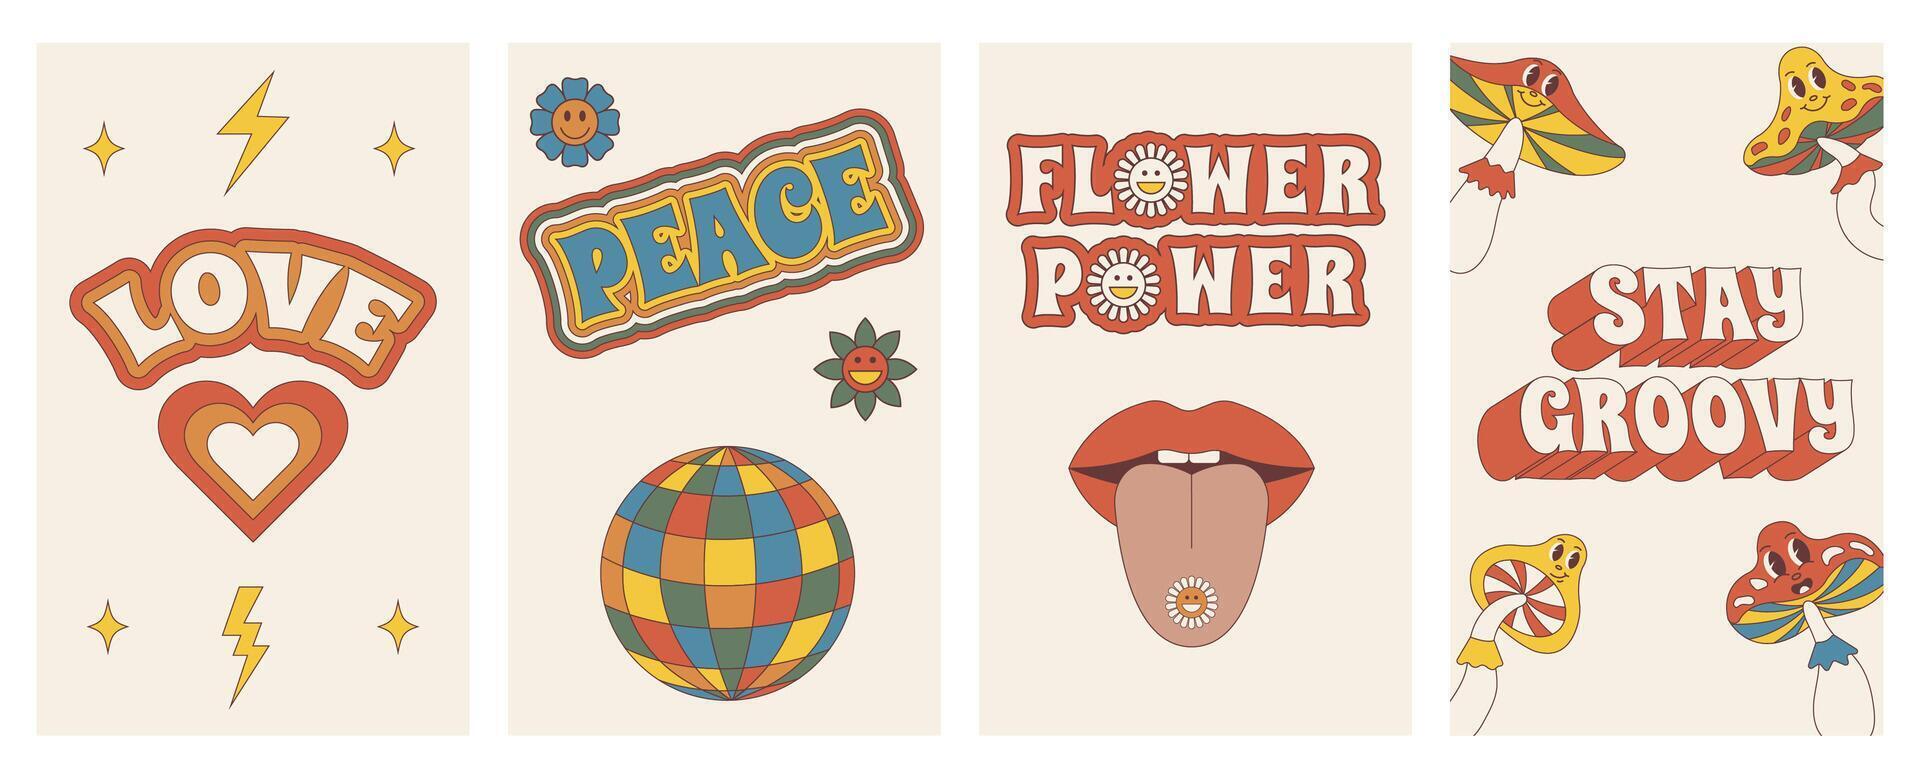 groovy cartazes. conjunto do cartazes dentro na moda retro trippy estilo. hippie anos 60, Anos 70 estilo. vetor